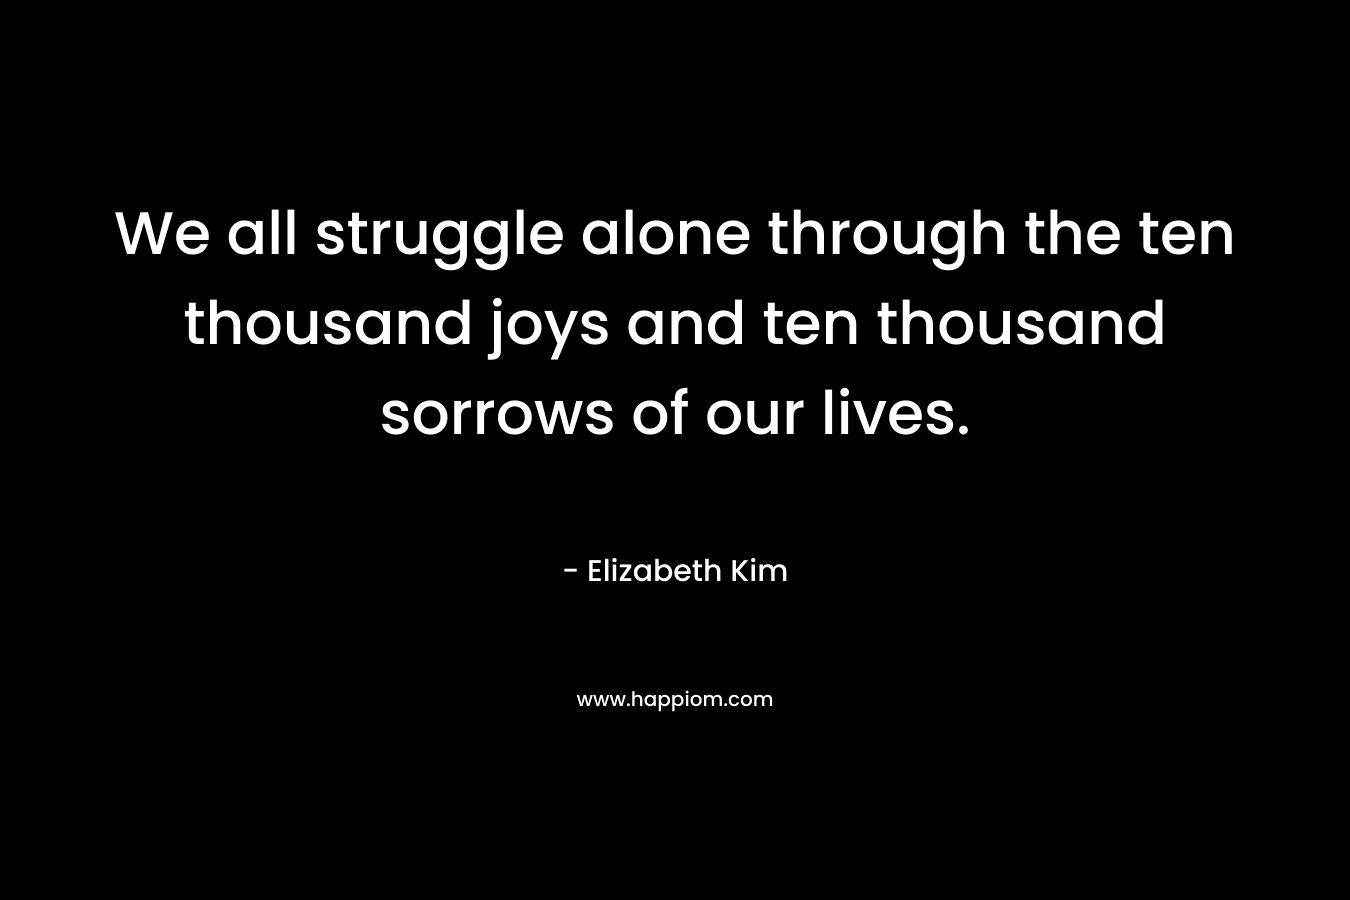 We all struggle alone through the ten thousand joys and ten thousand sorrows of our lives. – Elizabeth Kim